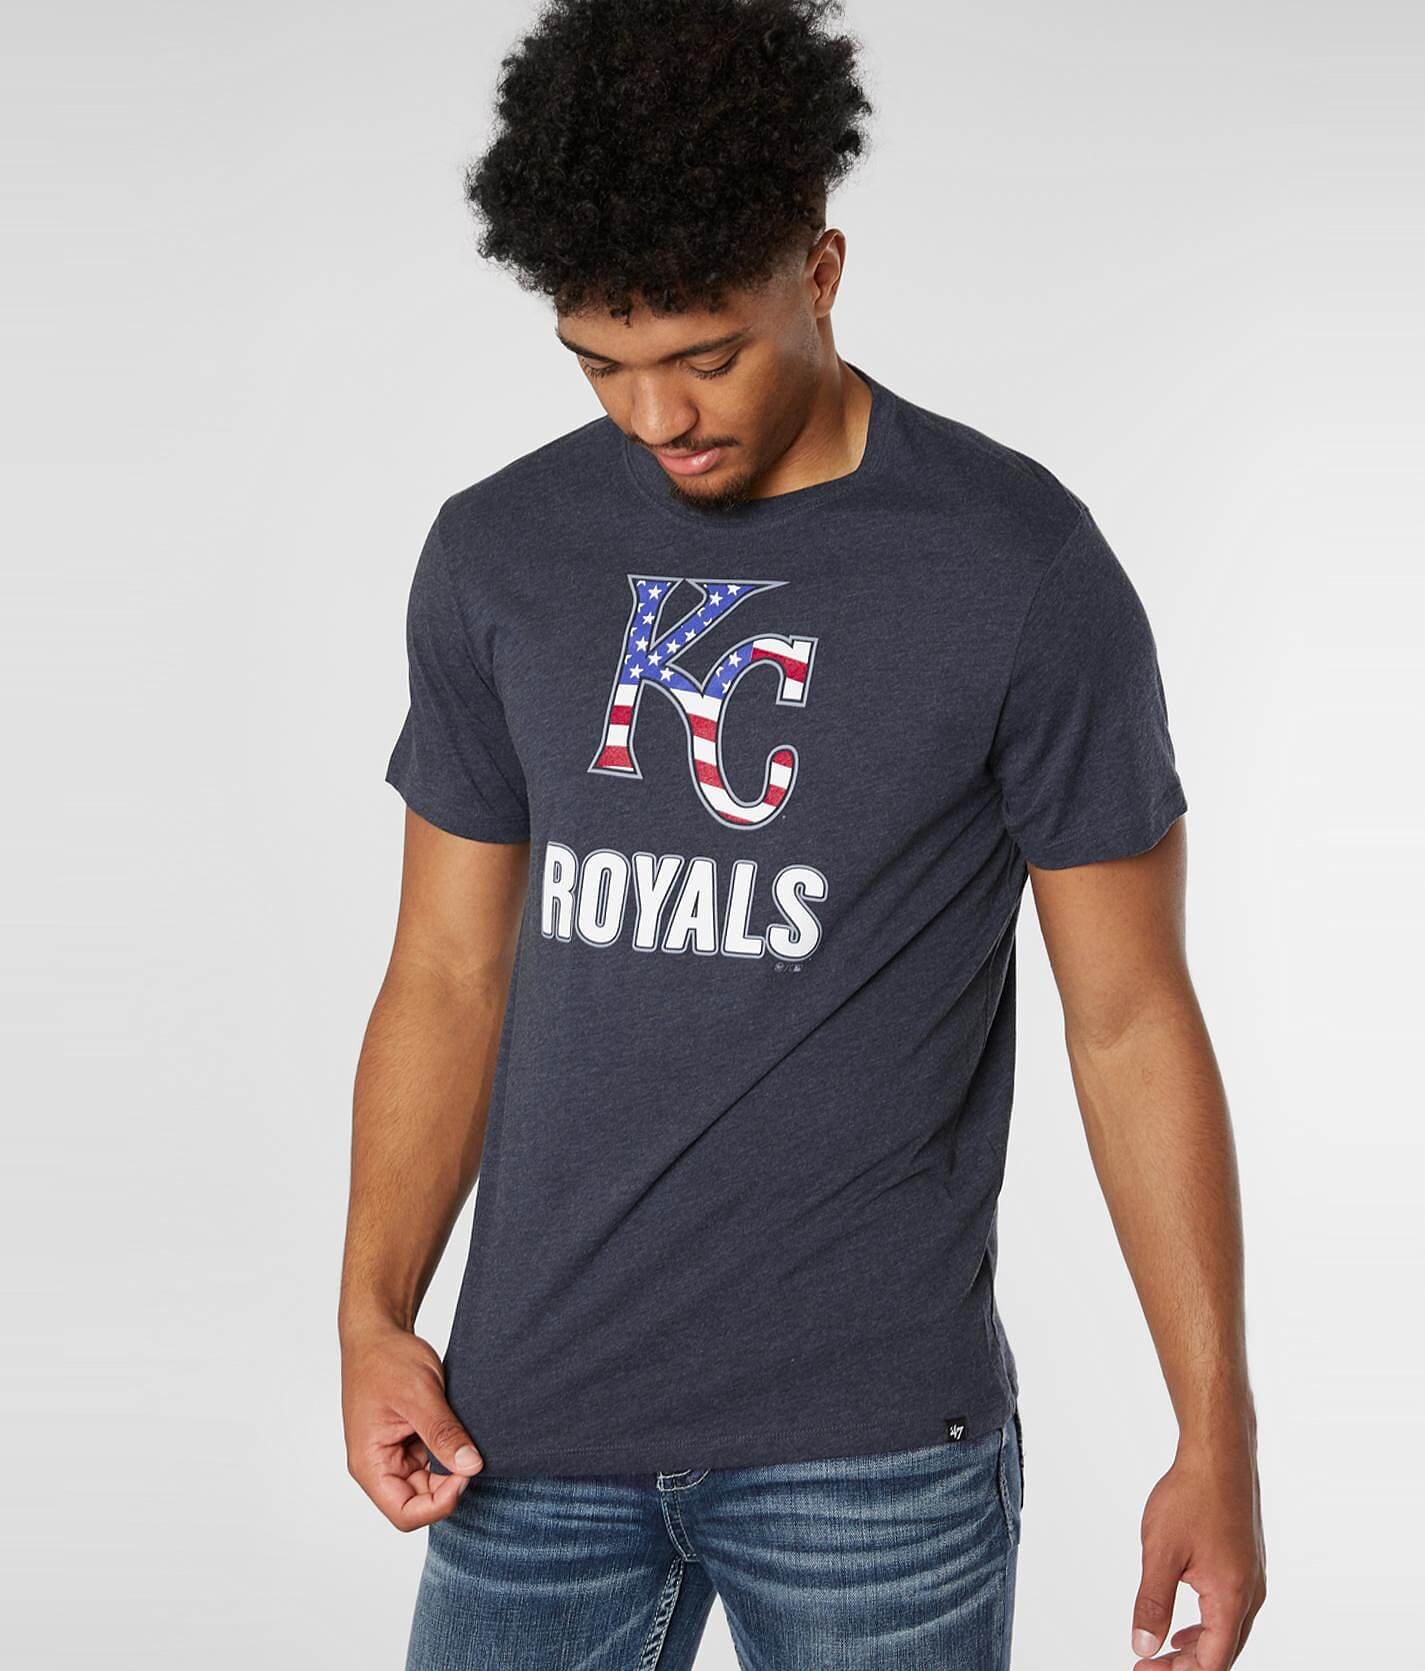 kc royals t shirts